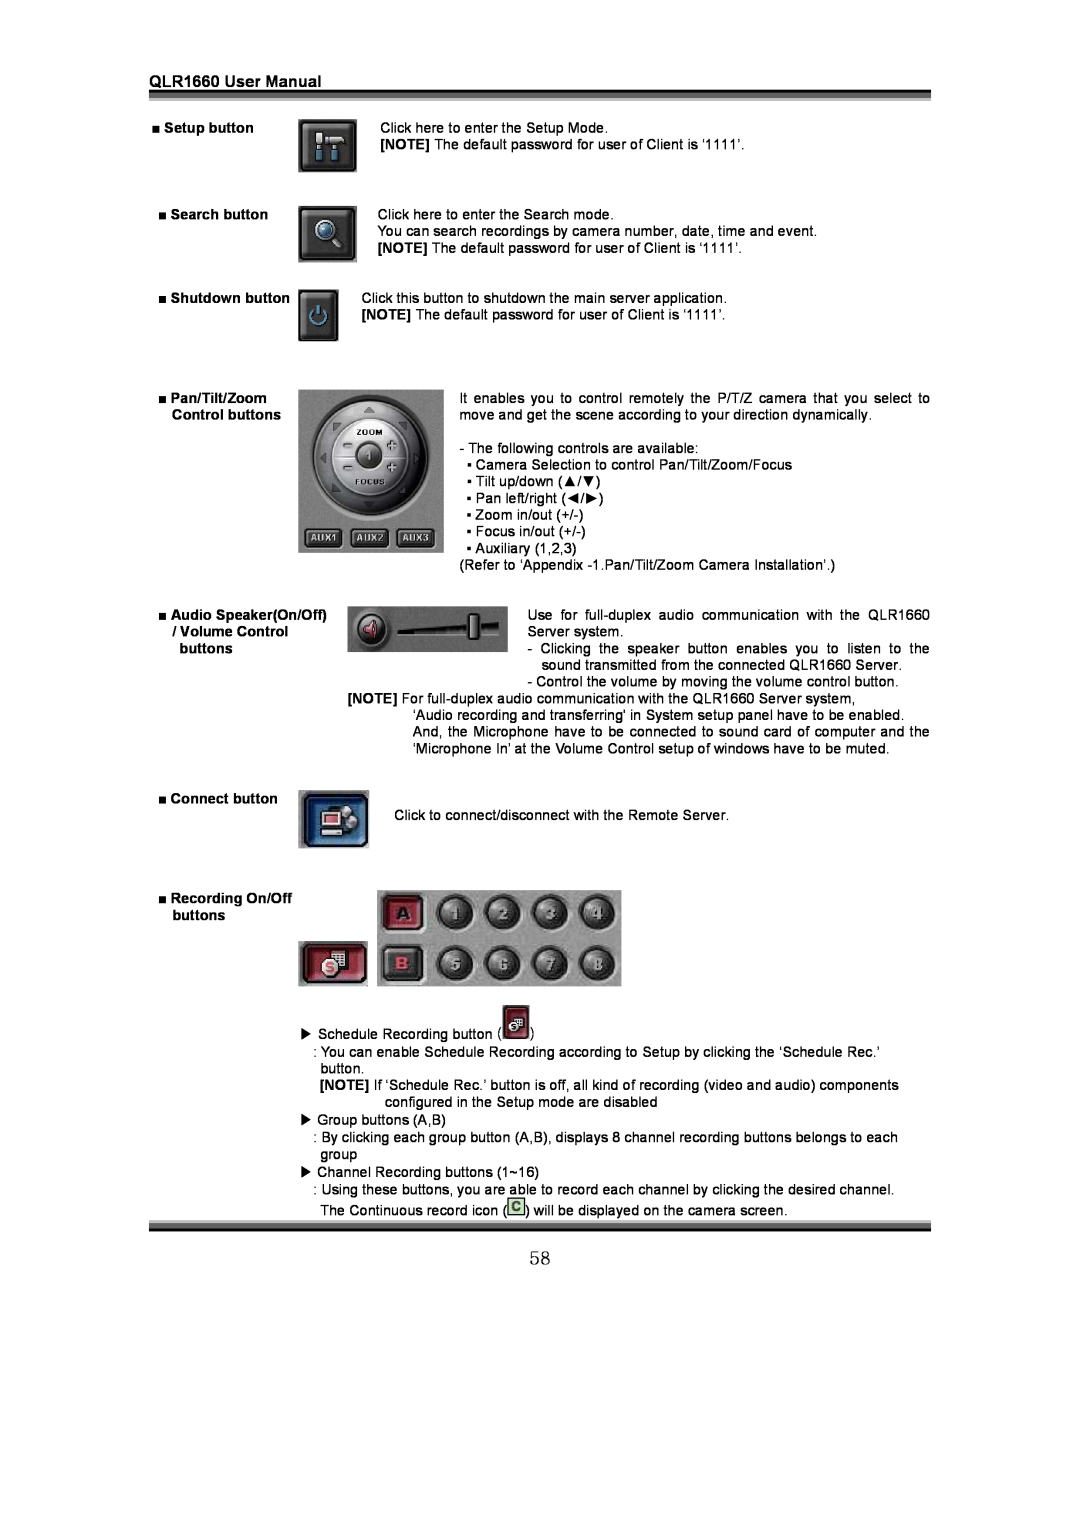 LOREX Technology Connect button, QLR1660 User Manual, Setup button, Search button, Shutdown button, Pan/Tilt/Zoom 